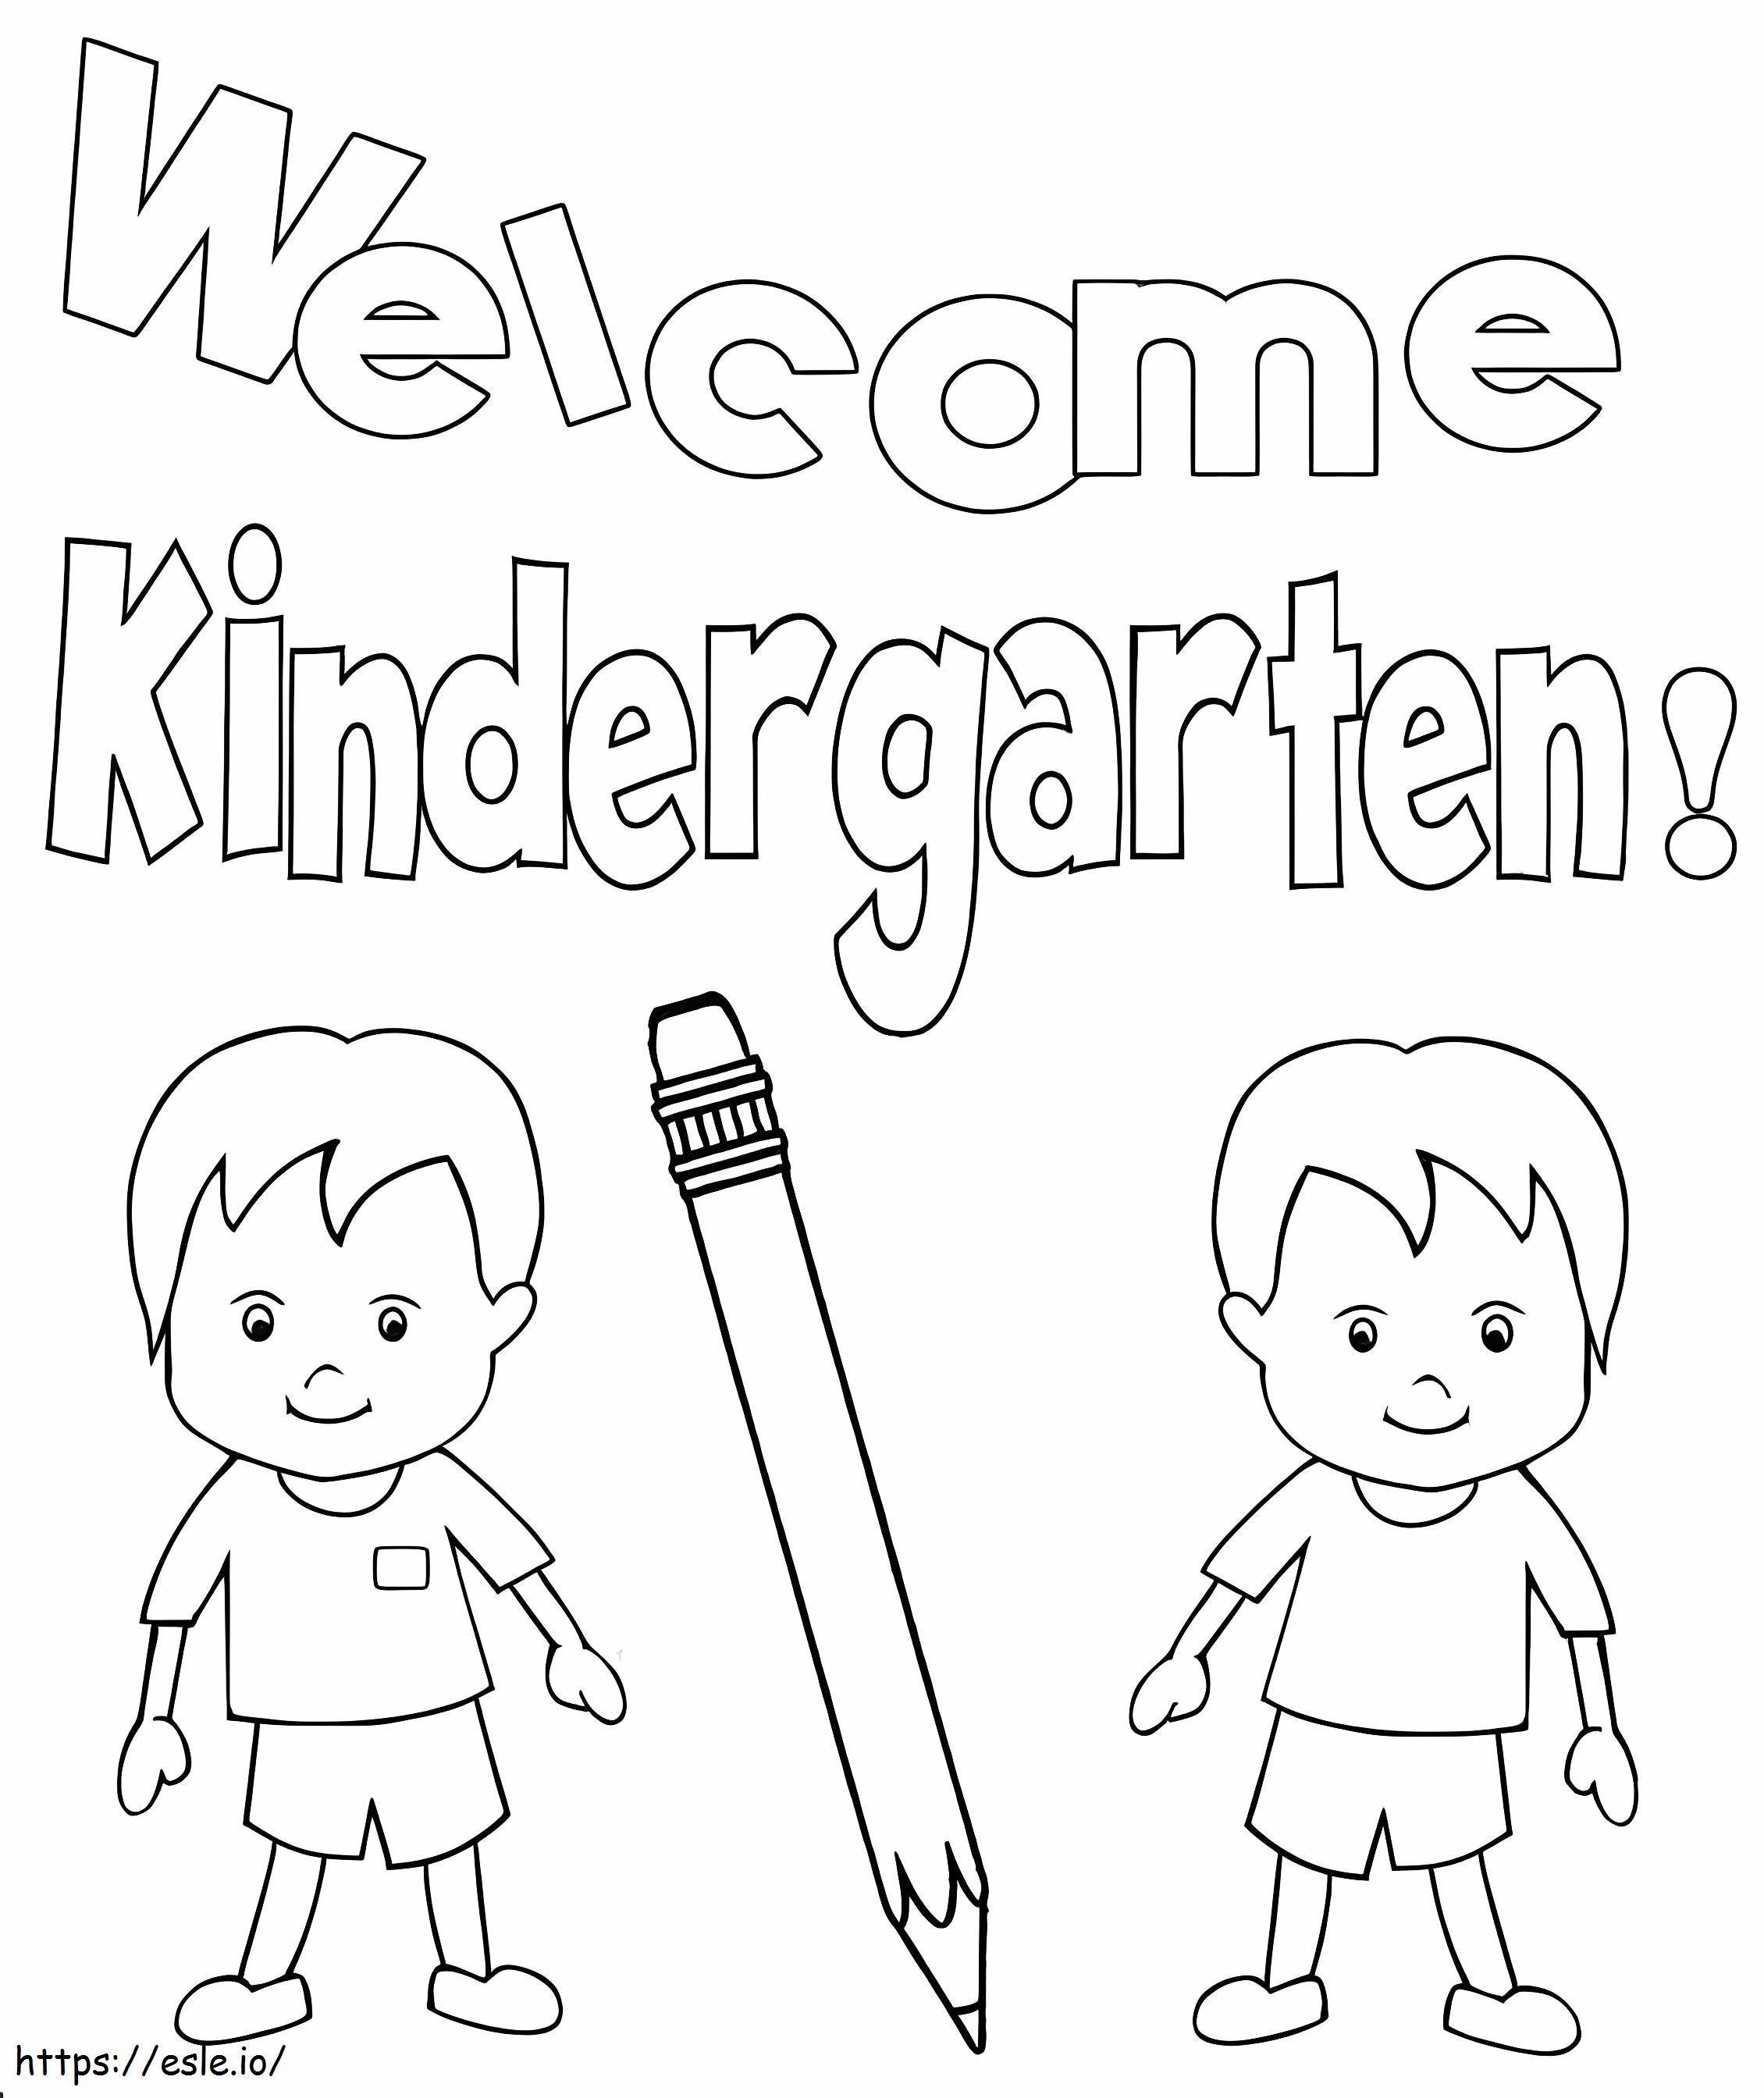 Kindergarten 2 coloring page